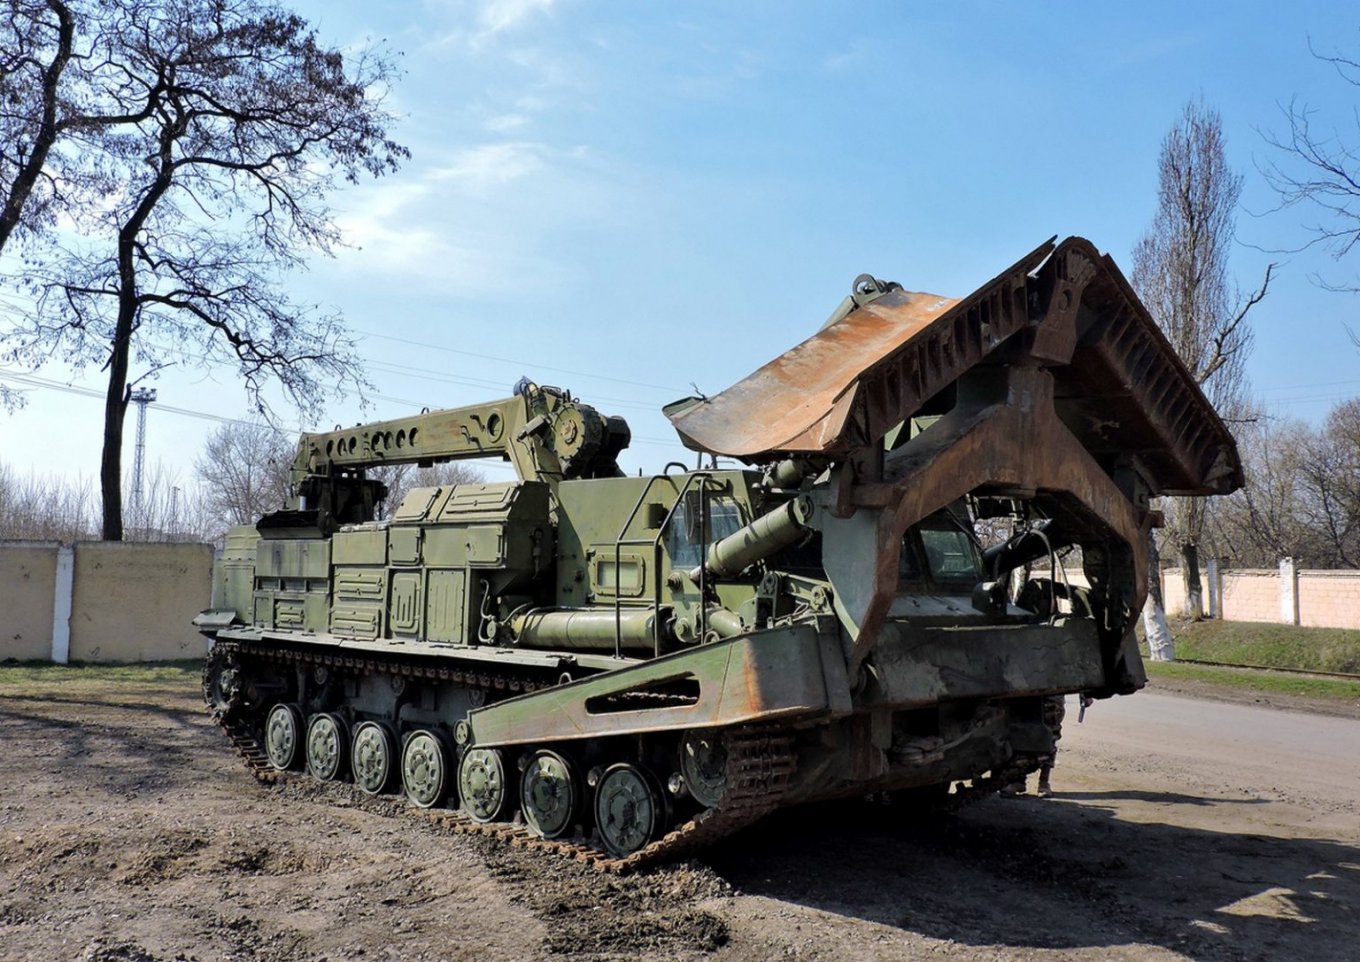 BAT-2 Armored Tracklayer Destroyed By Ukraine’s Artillery (Video), Defense Express, war in Ukraine, Russian-Ukrainian war